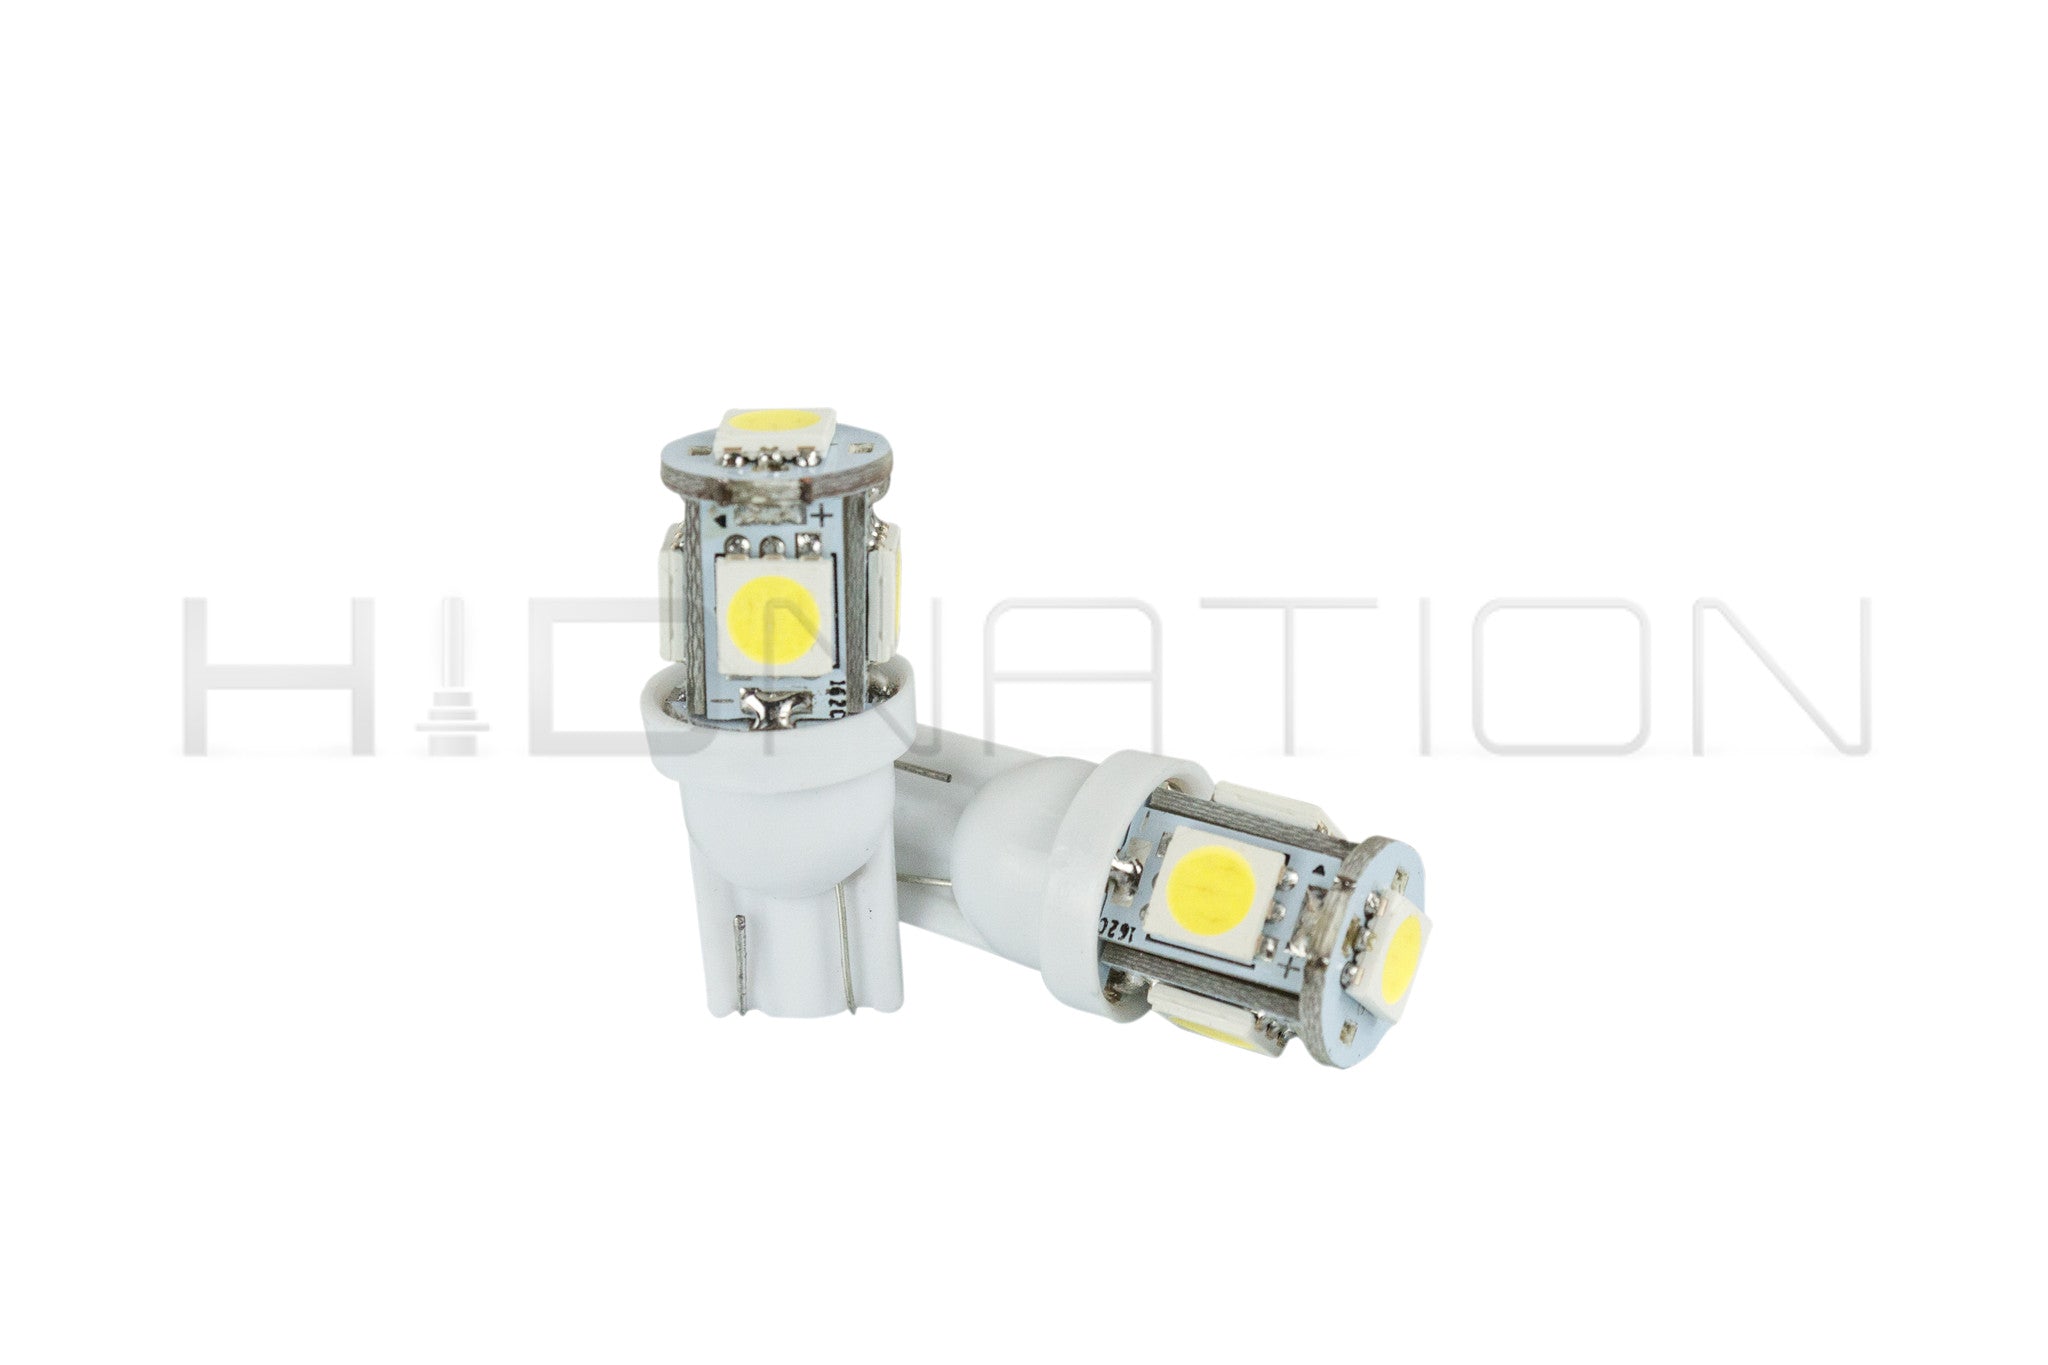 Lanseko H15 LED Bulbs - Speedy Parts